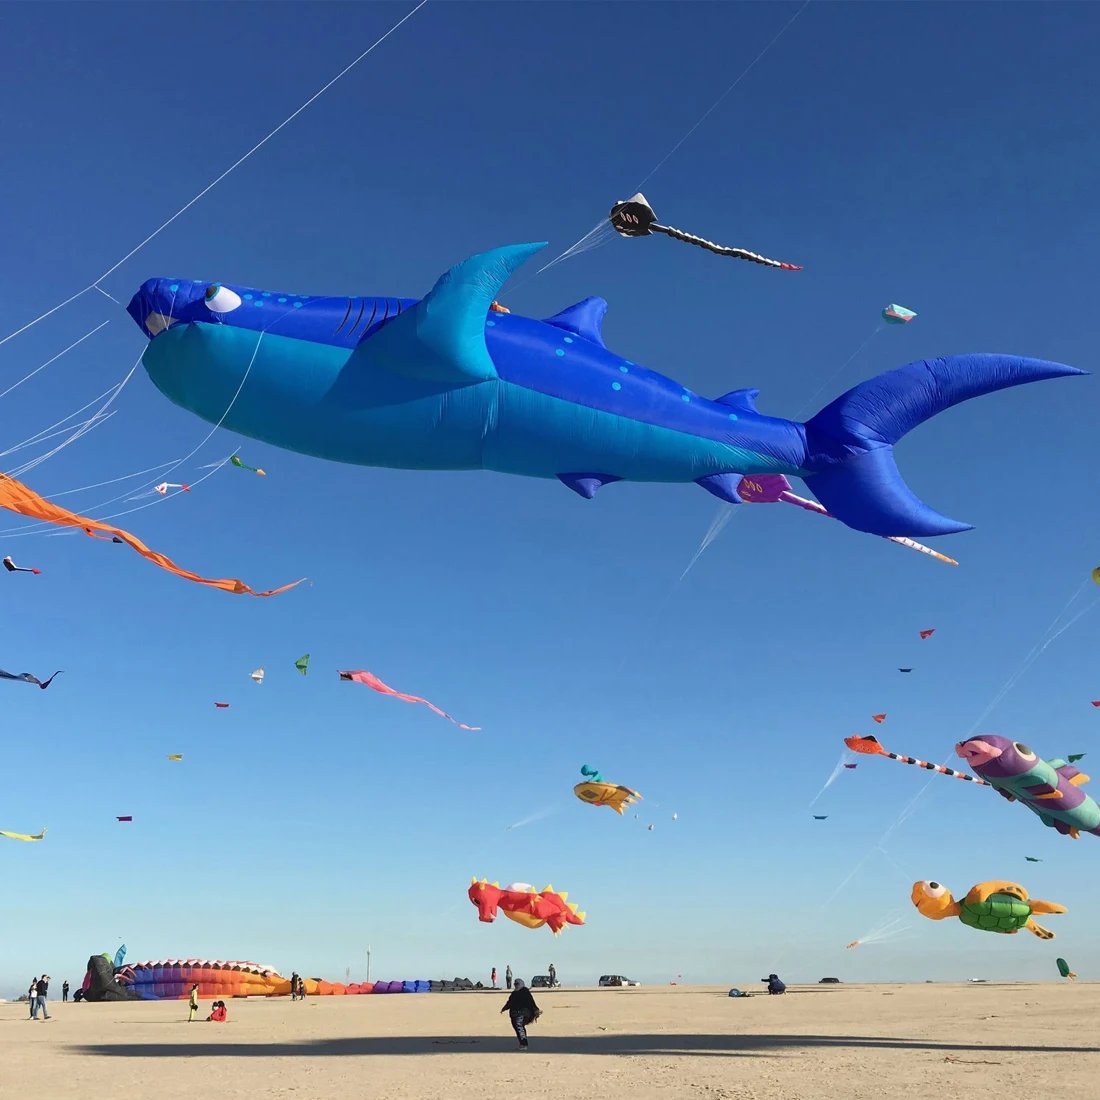 9KM 6m Whale Shark Kite Line Laundry Kite Pendant Soft Inflatable Show Kite for Kite Festival 30D Ripstop Nylon with Bag